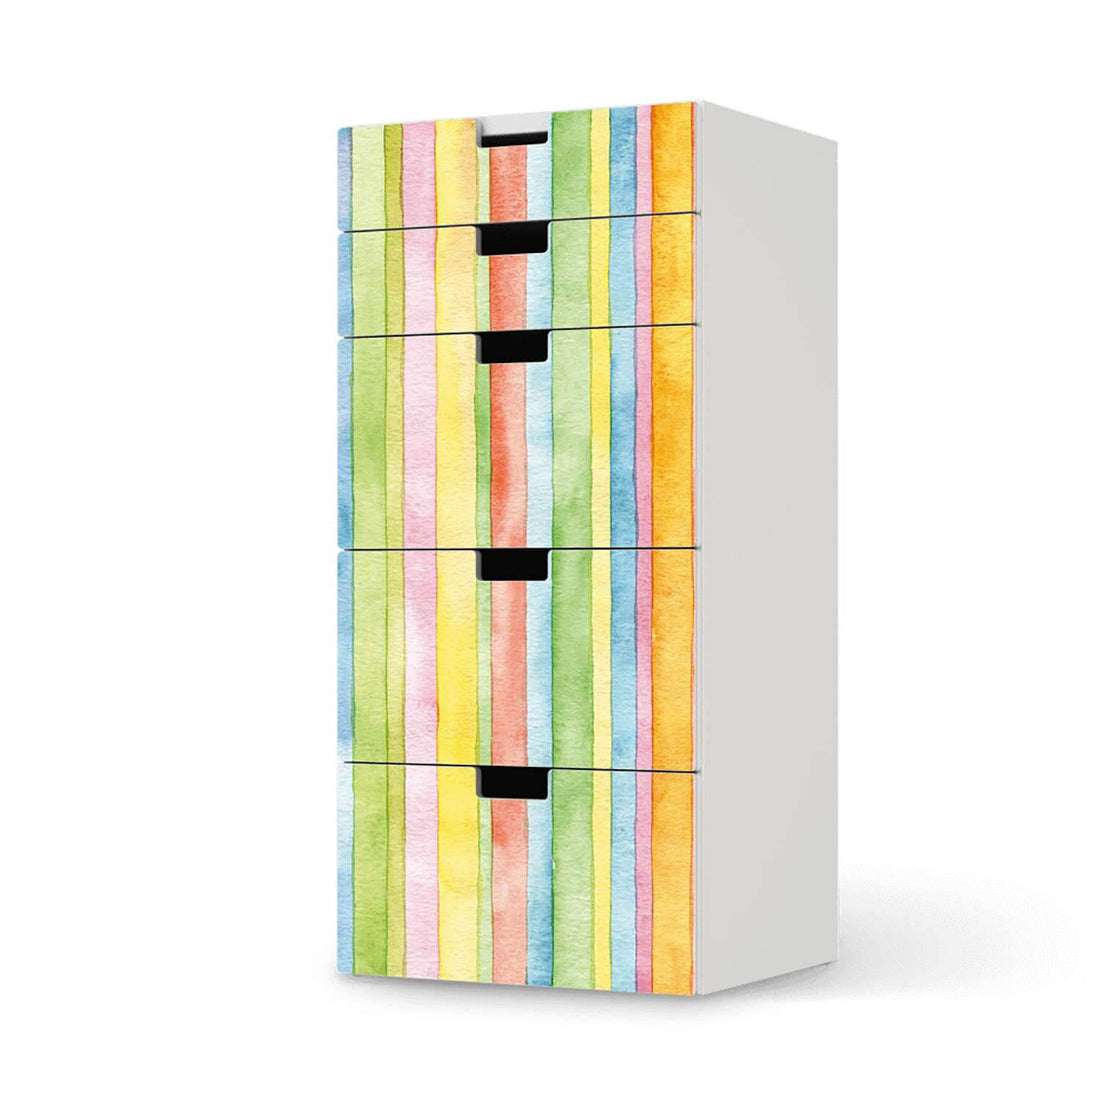 Möbel Klebefolie Watercolor Stripes - IKEA Stuva Kommode - 5 Schubladen  - weiss